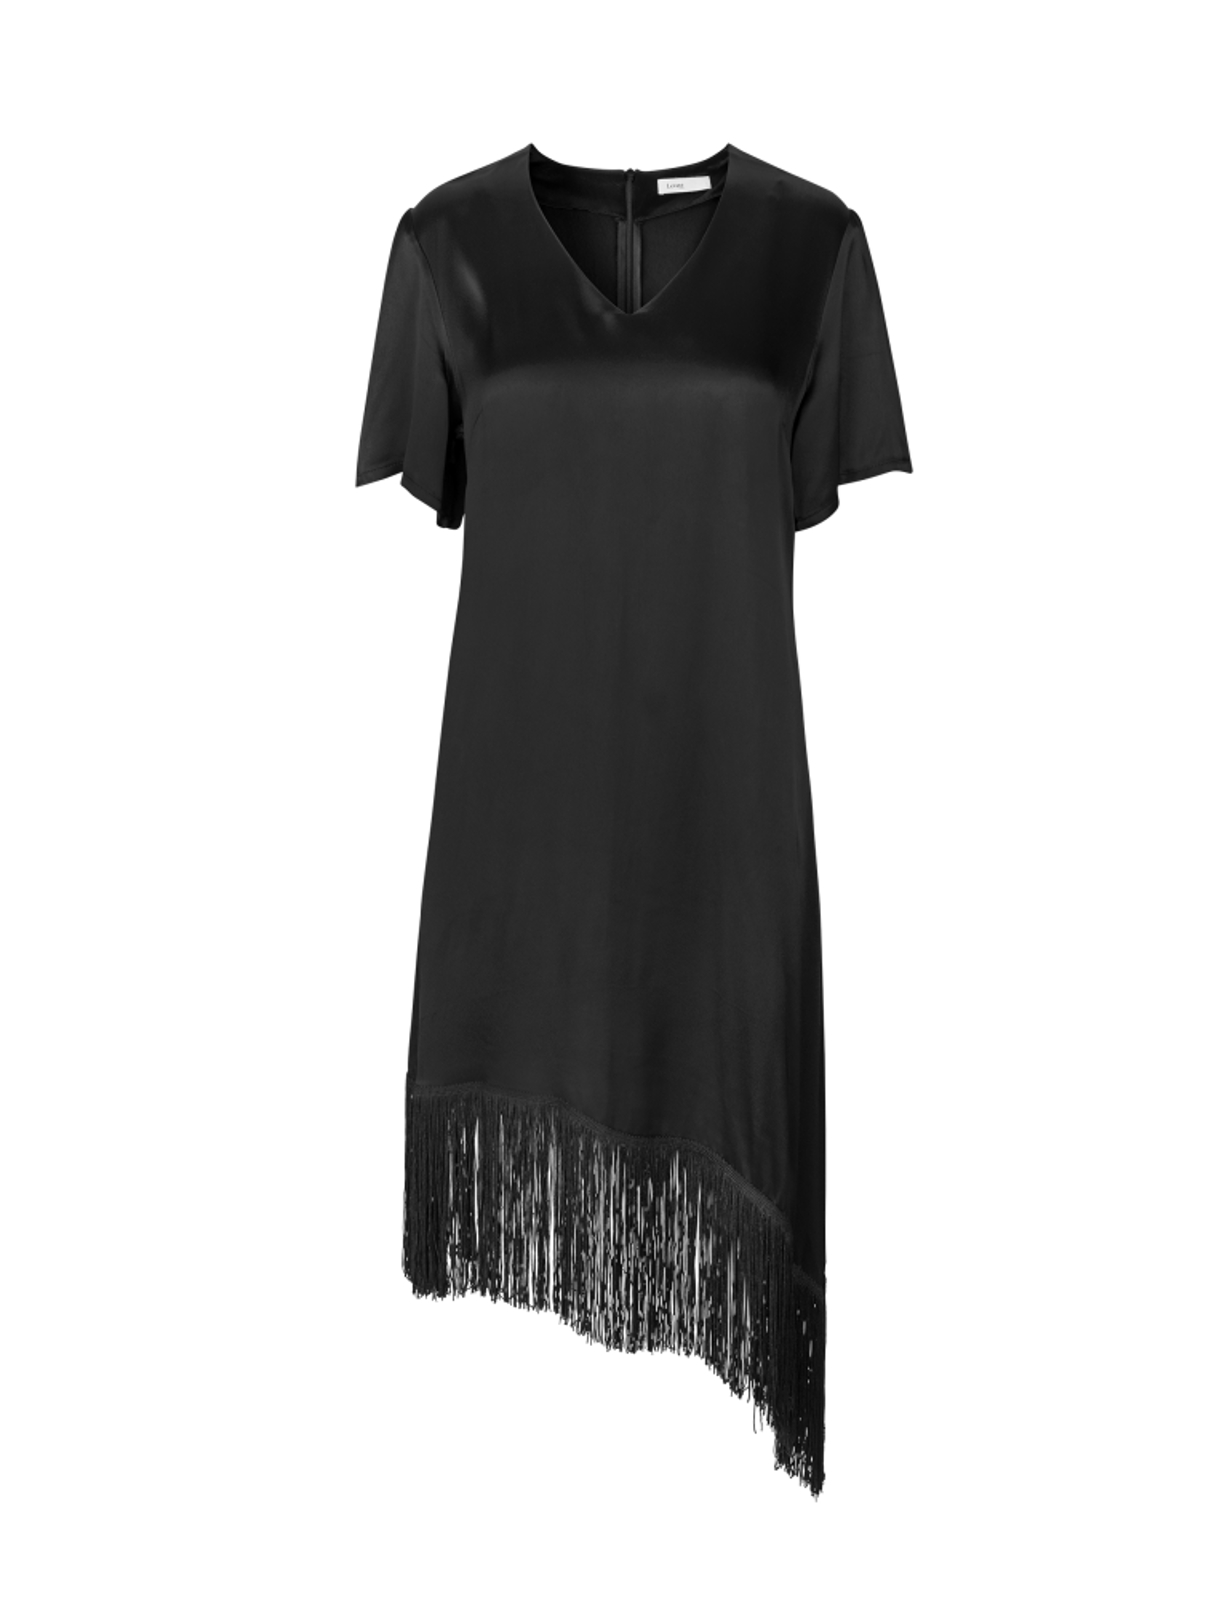 Levete Room Florence 10 Dress Black: M - Quattro Rish